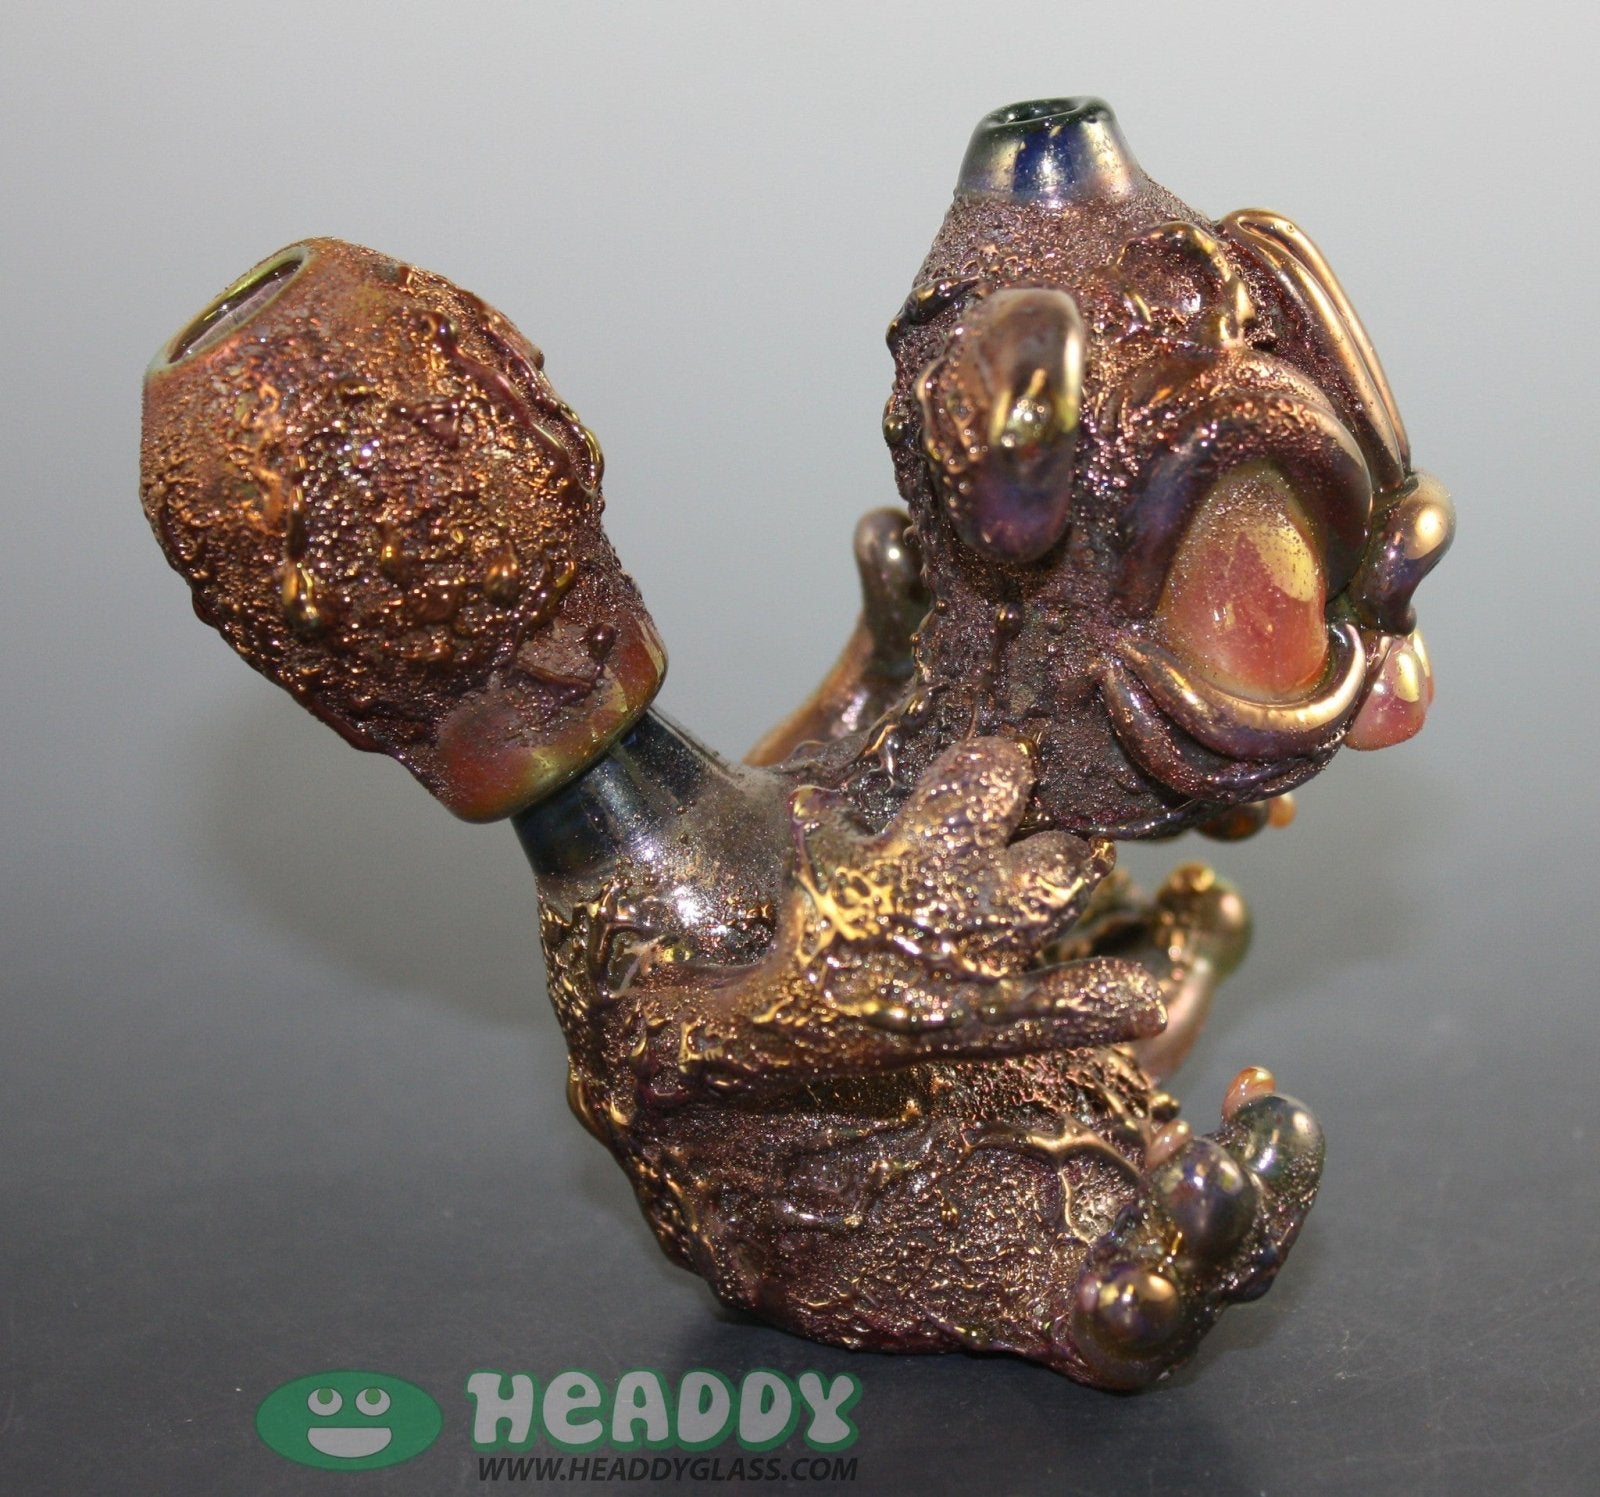 Casto bronze vapor rig - Headdy Glass